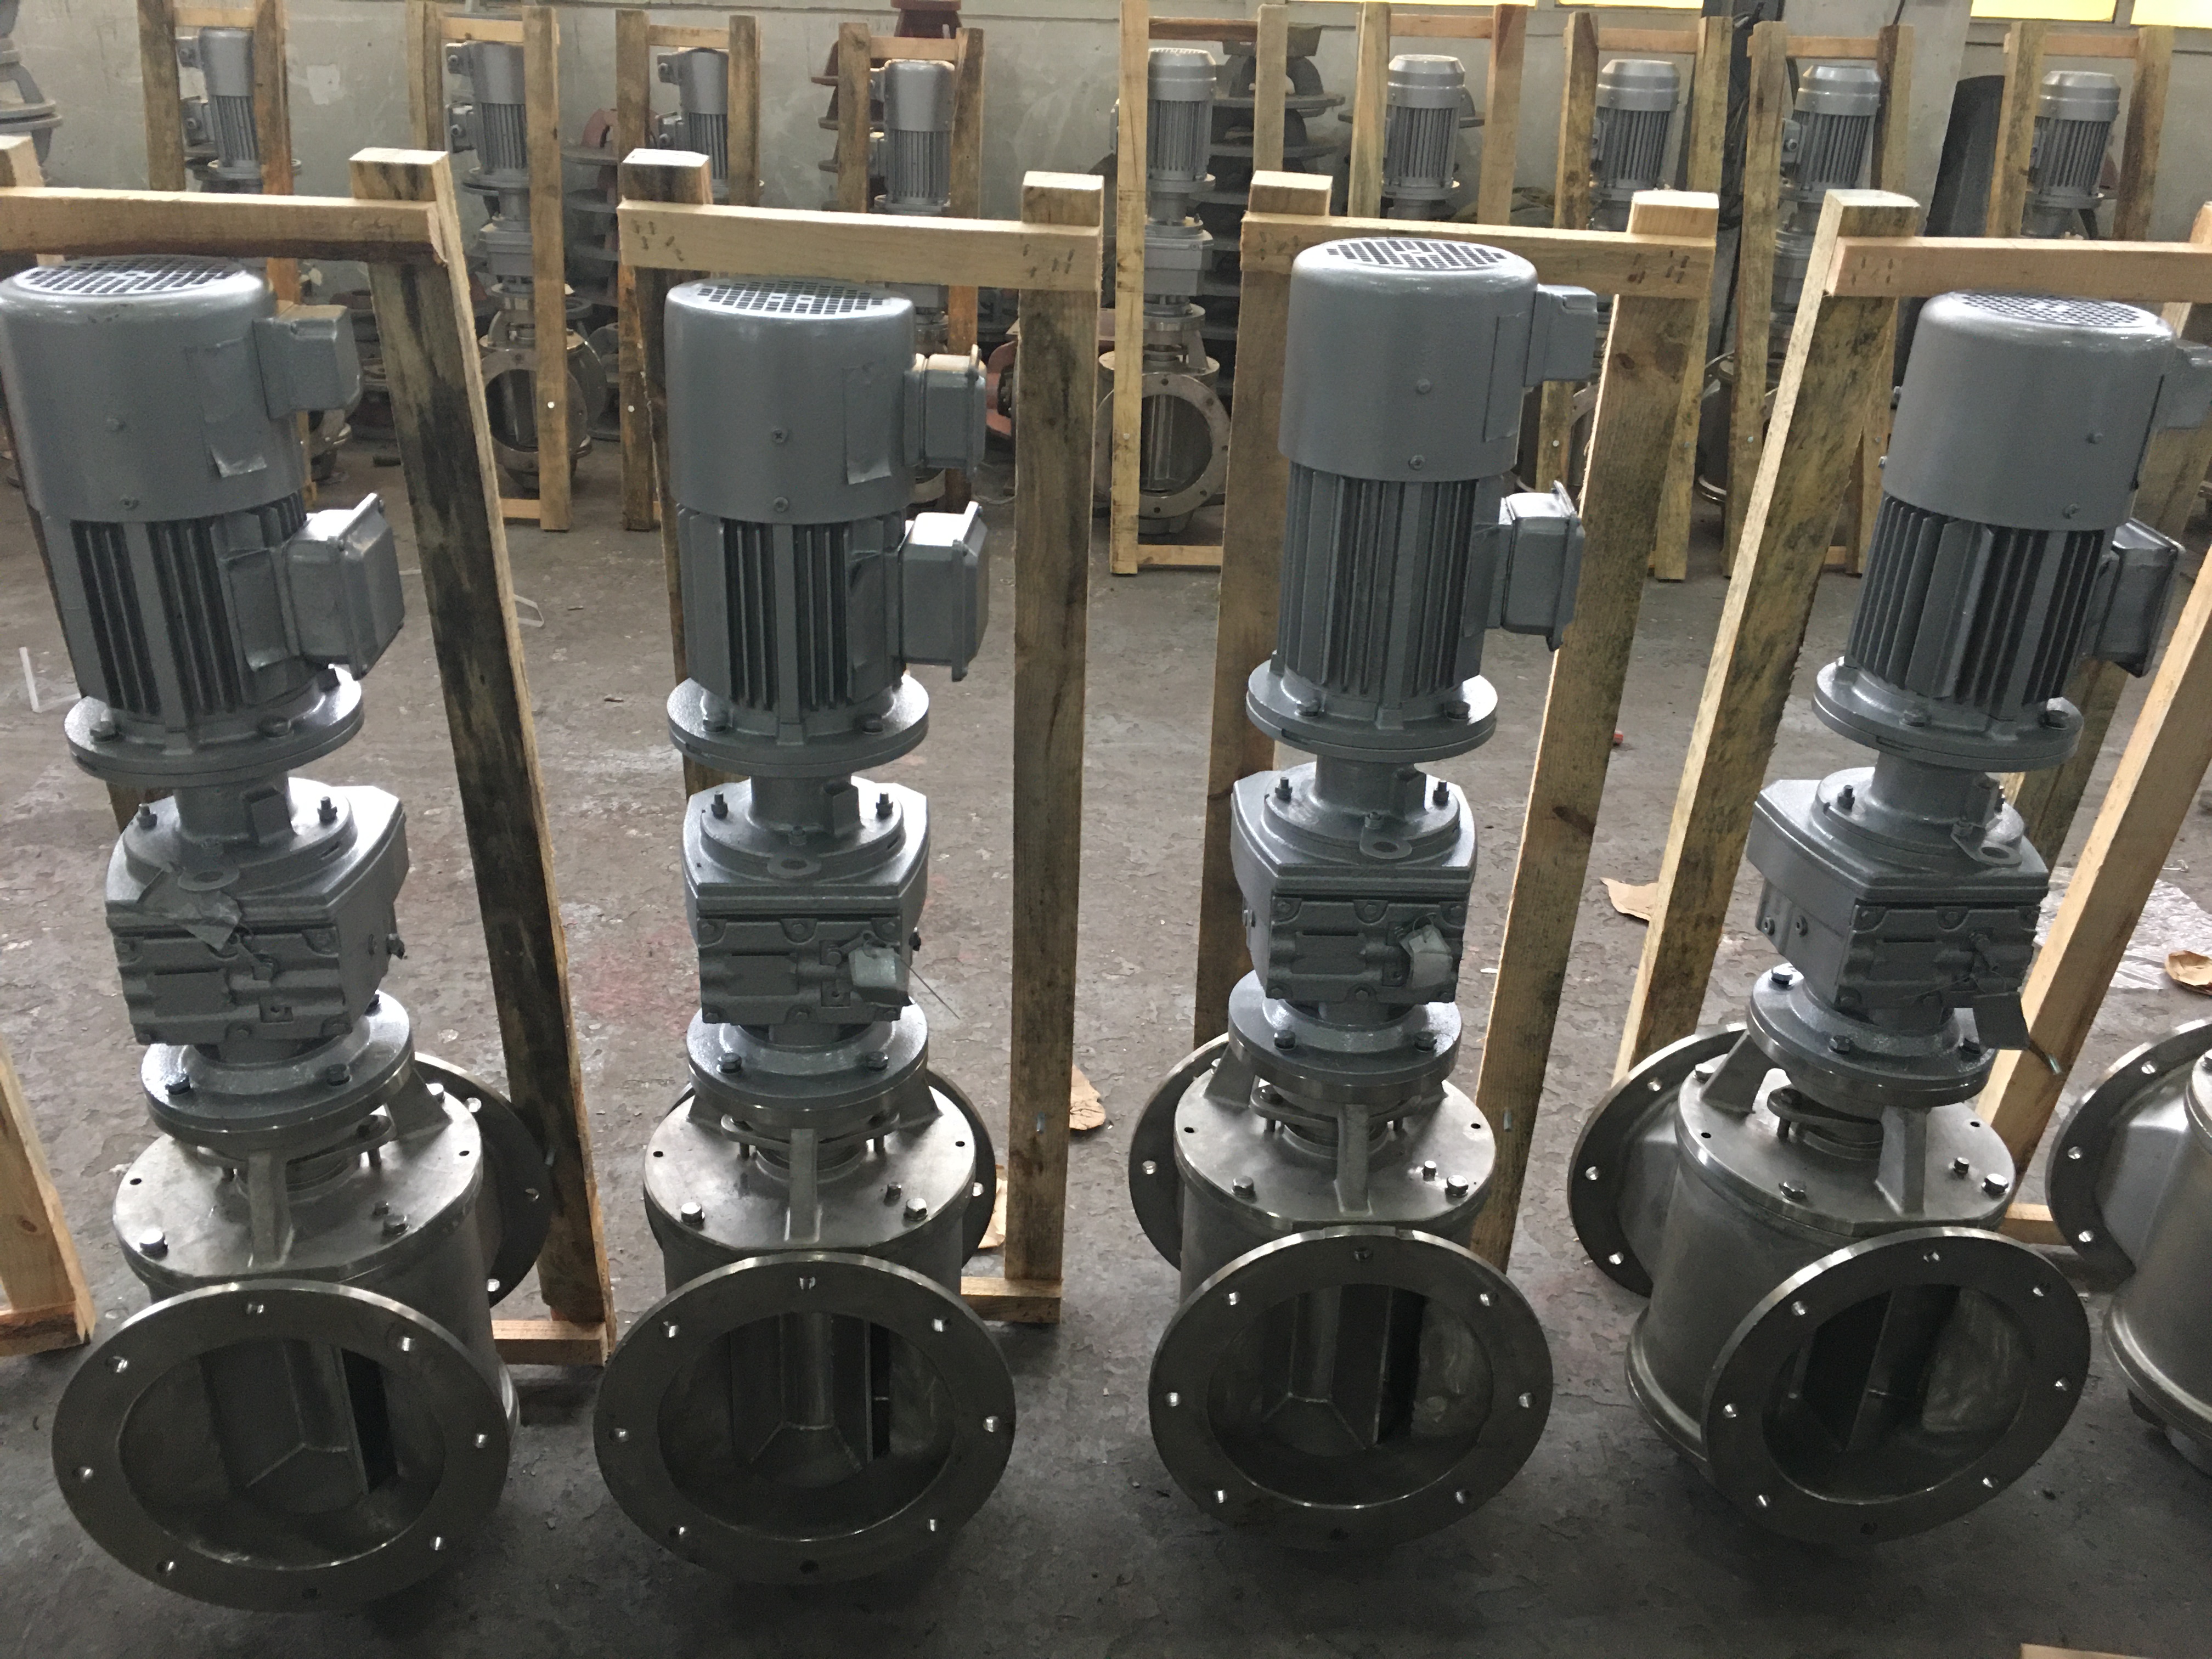 3 way diverter valve China patented product with CE pneumatic conveyor rotary valve